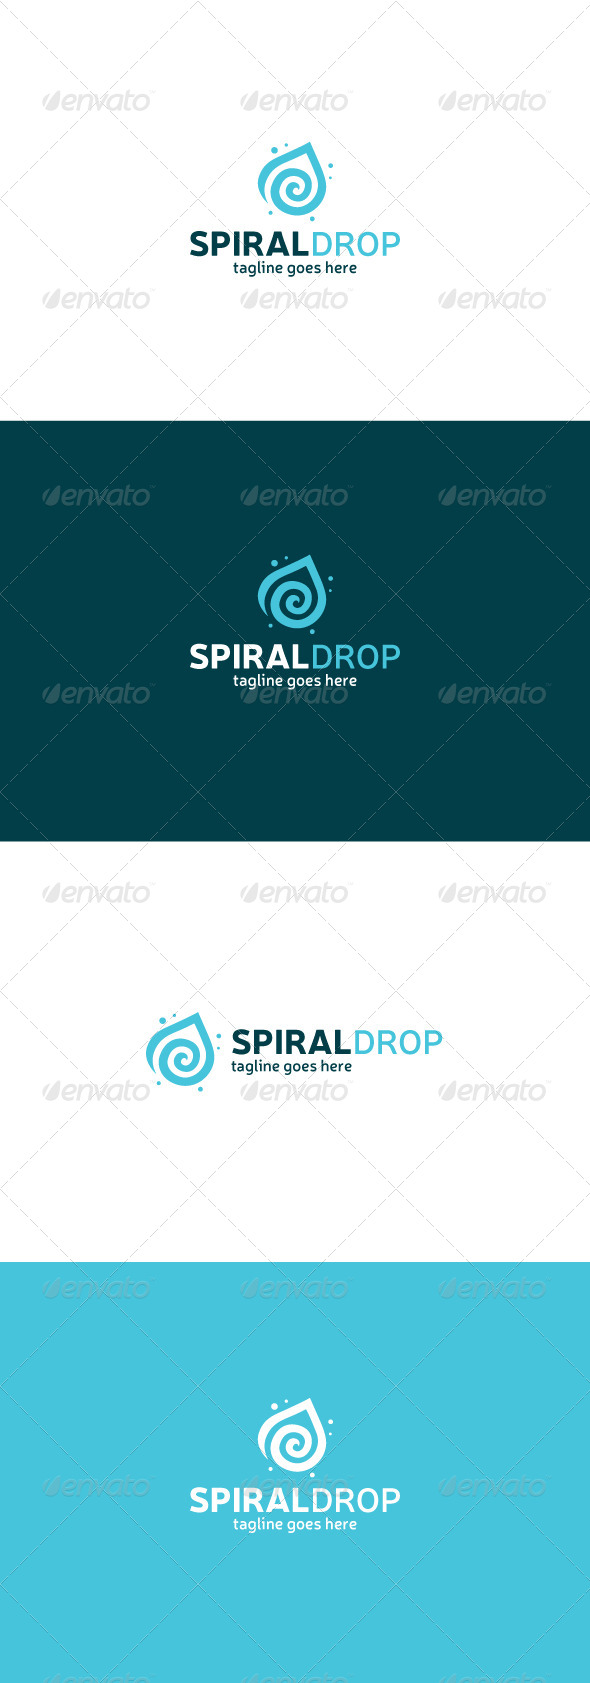 Spiral Drop Logo